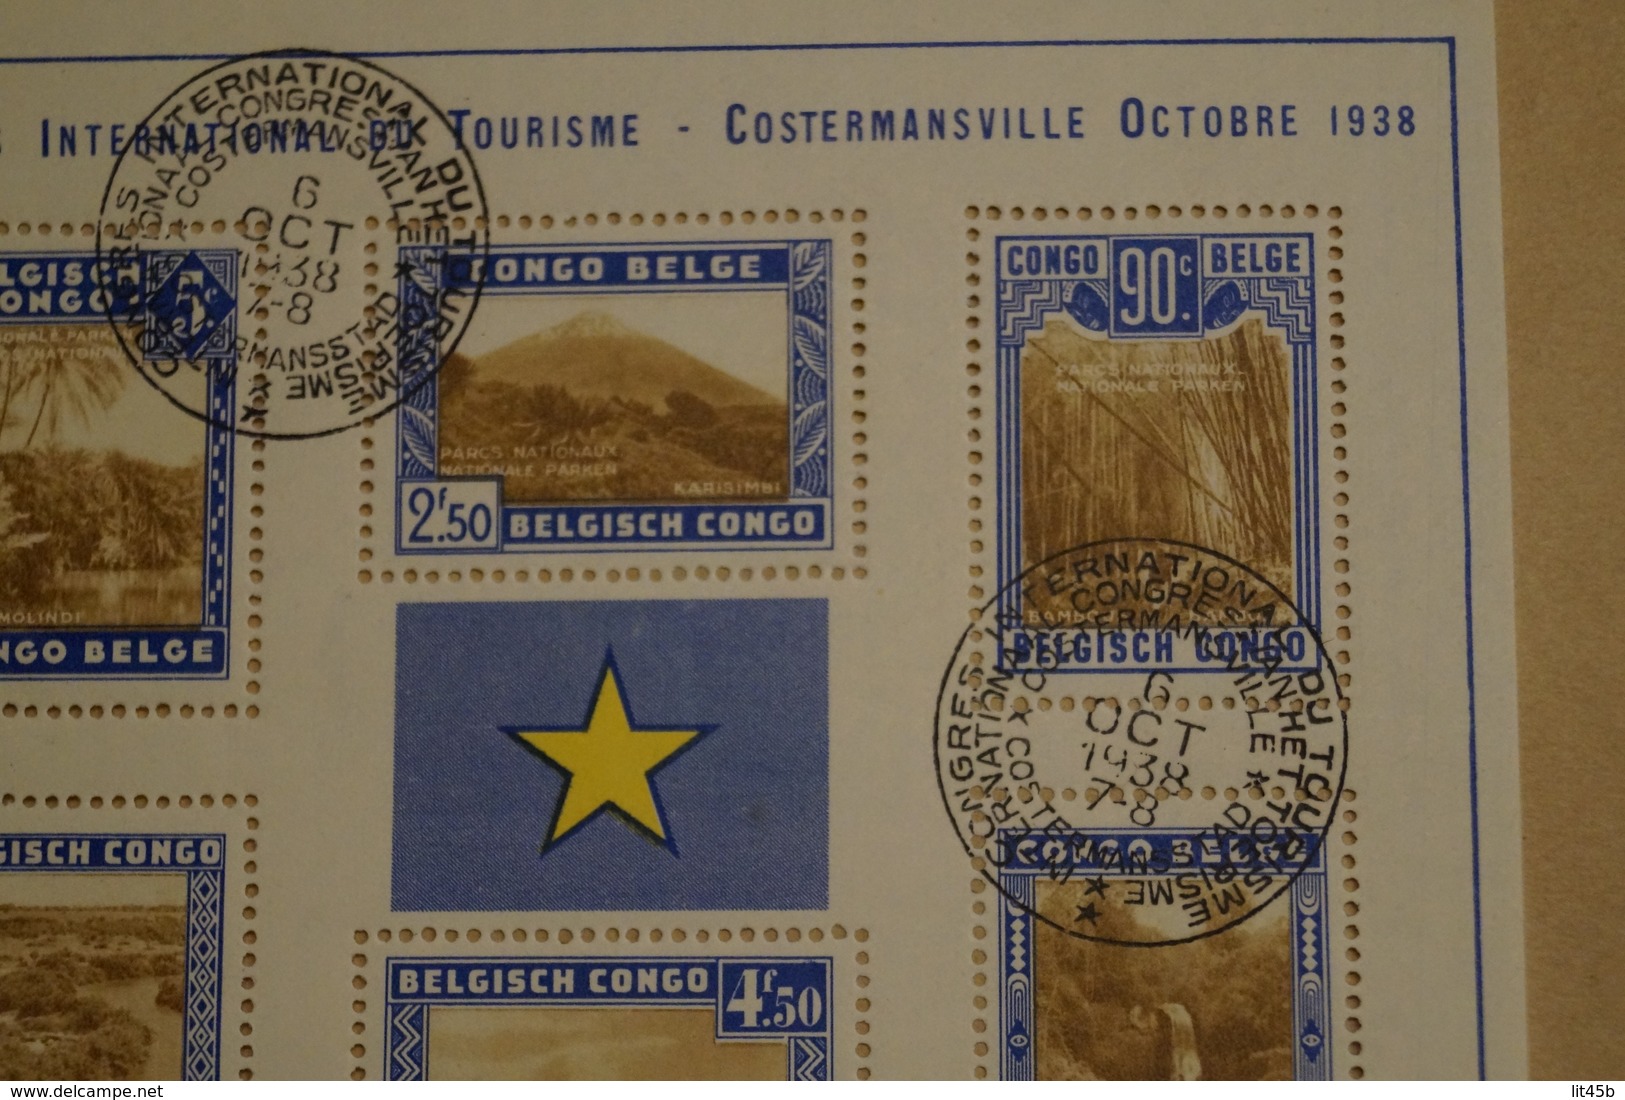 RARE Feuillet Congo Belge,octobre 1938,état Neuf Avec Gomme,Costermansville,collection - Neufs